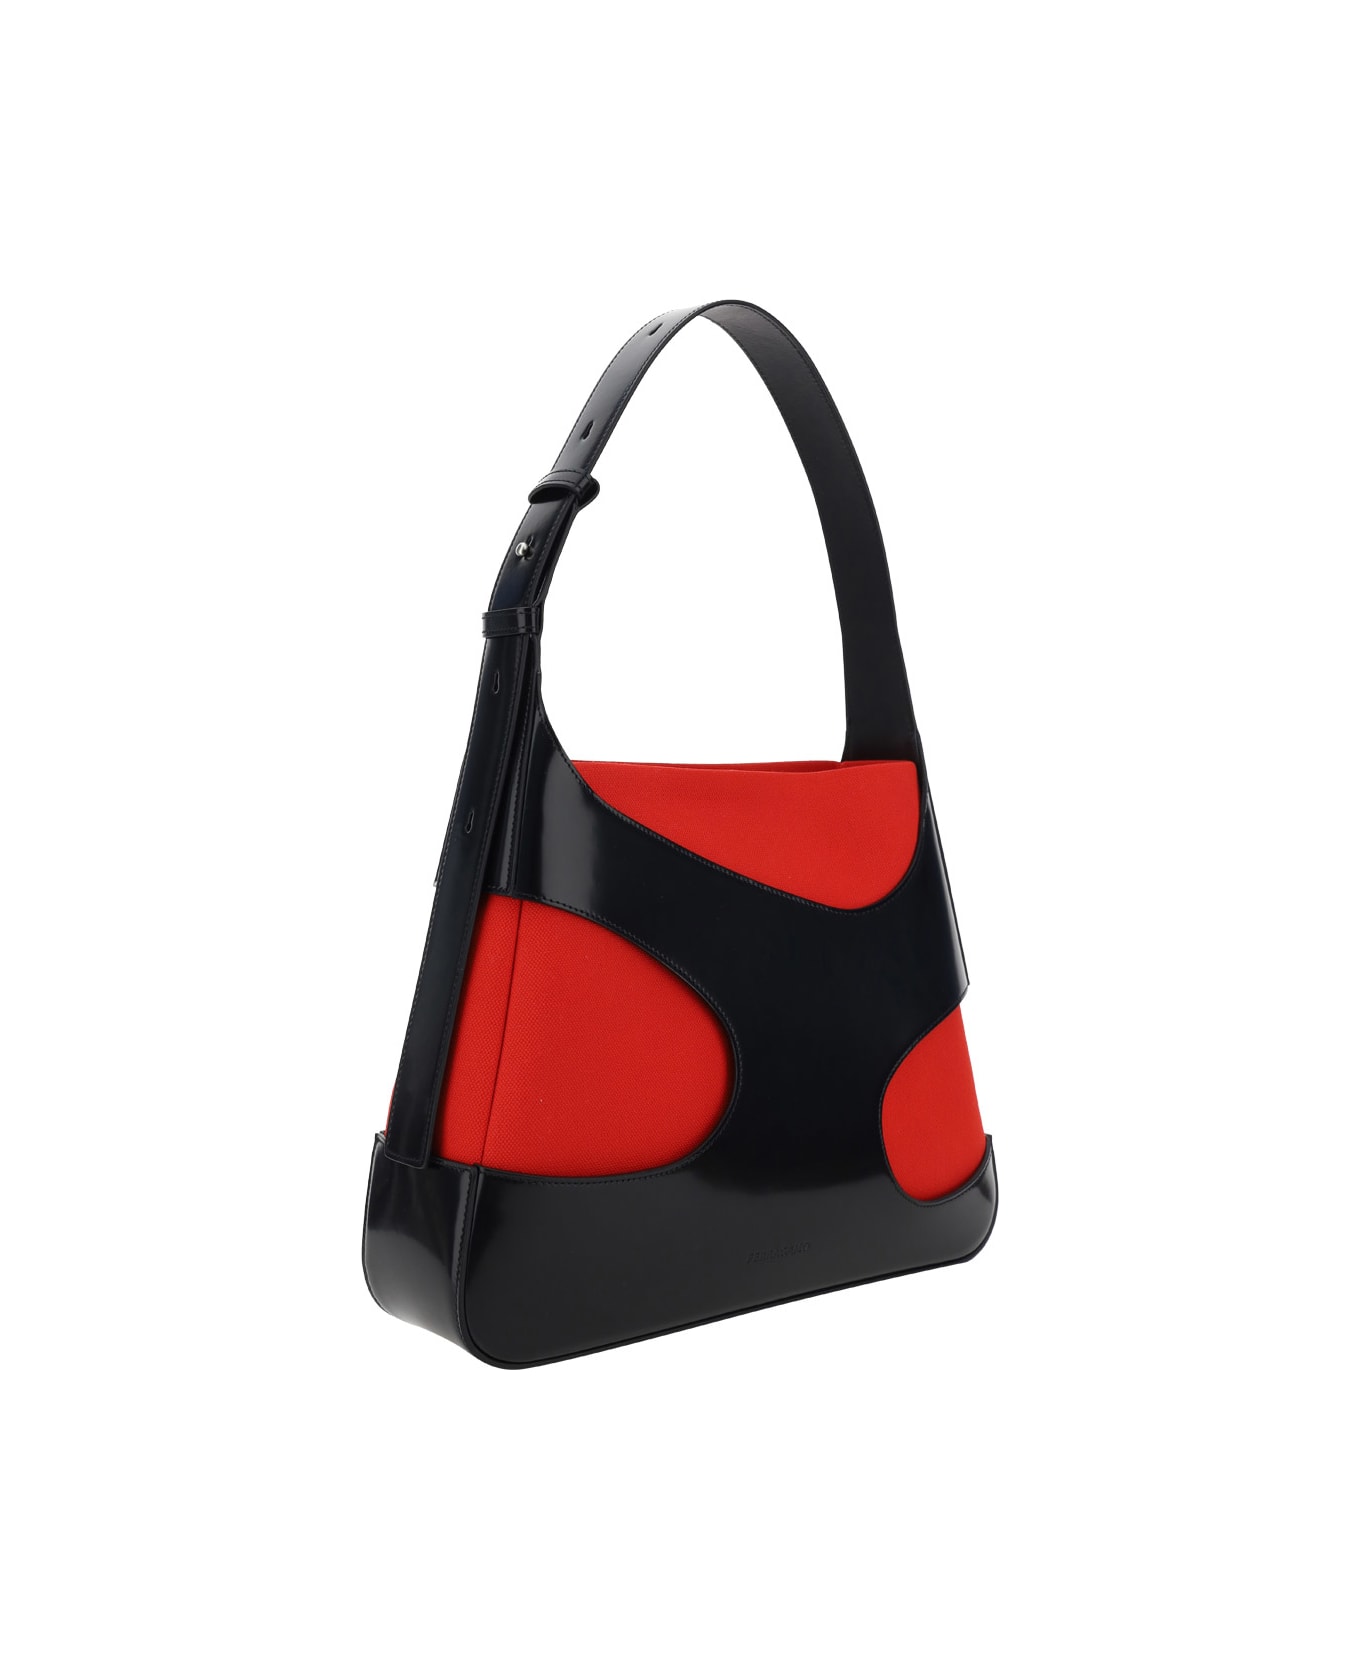 Ferragamo Cut-out Shoulder Bag - Nero/f.red